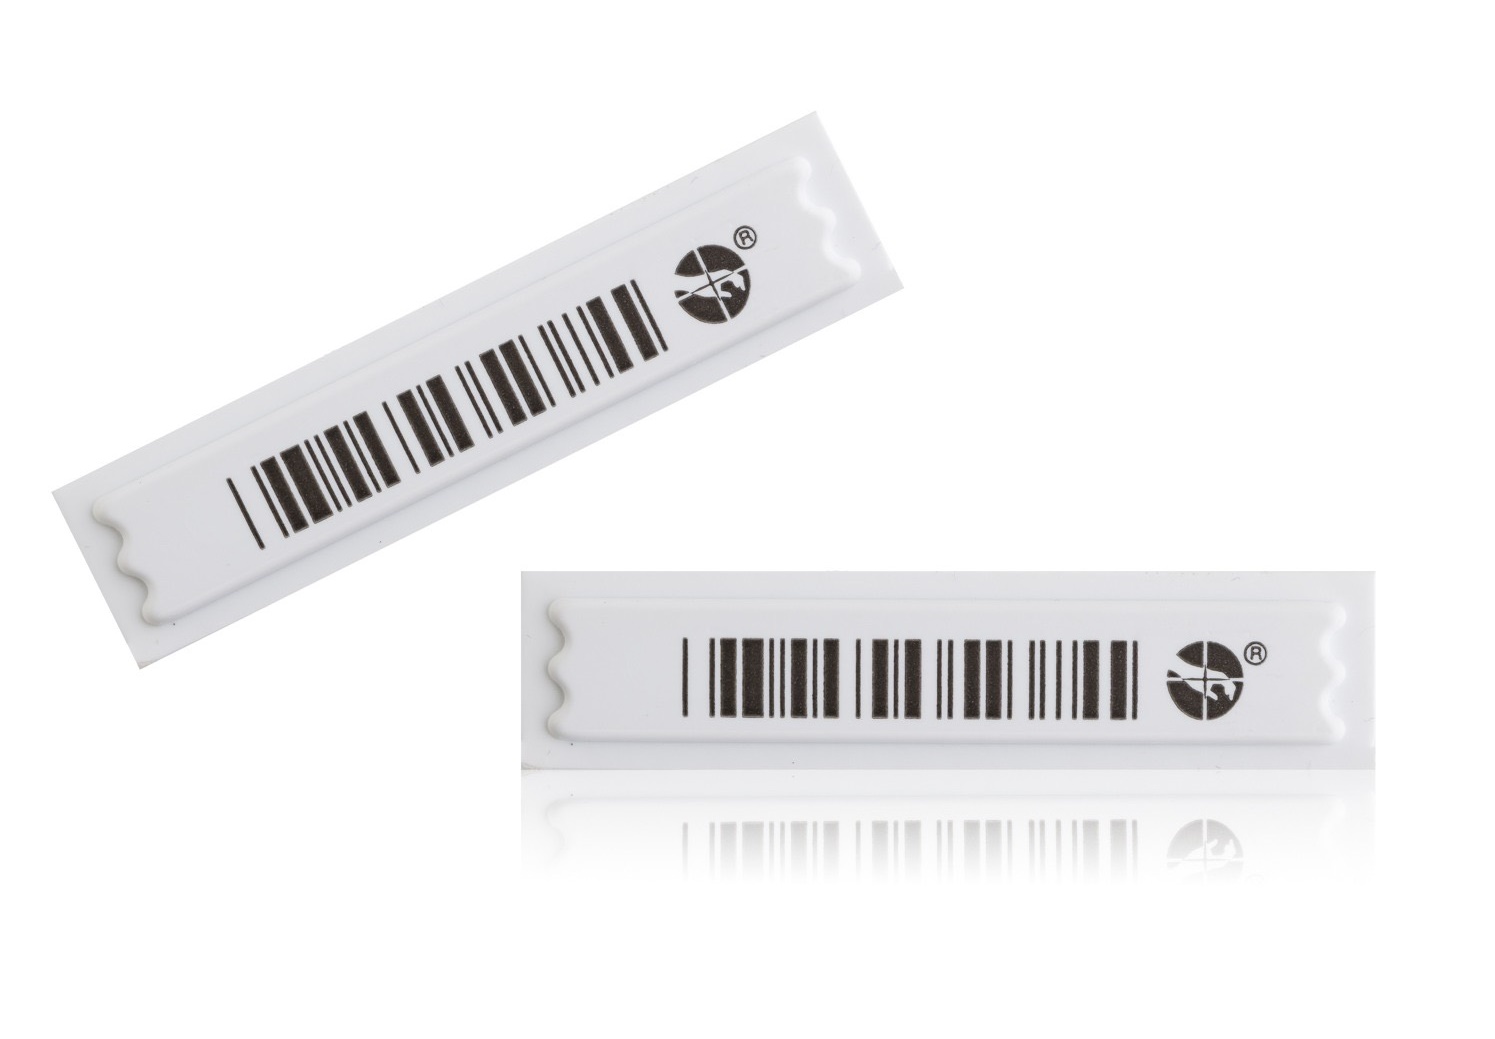 soft strip security labels